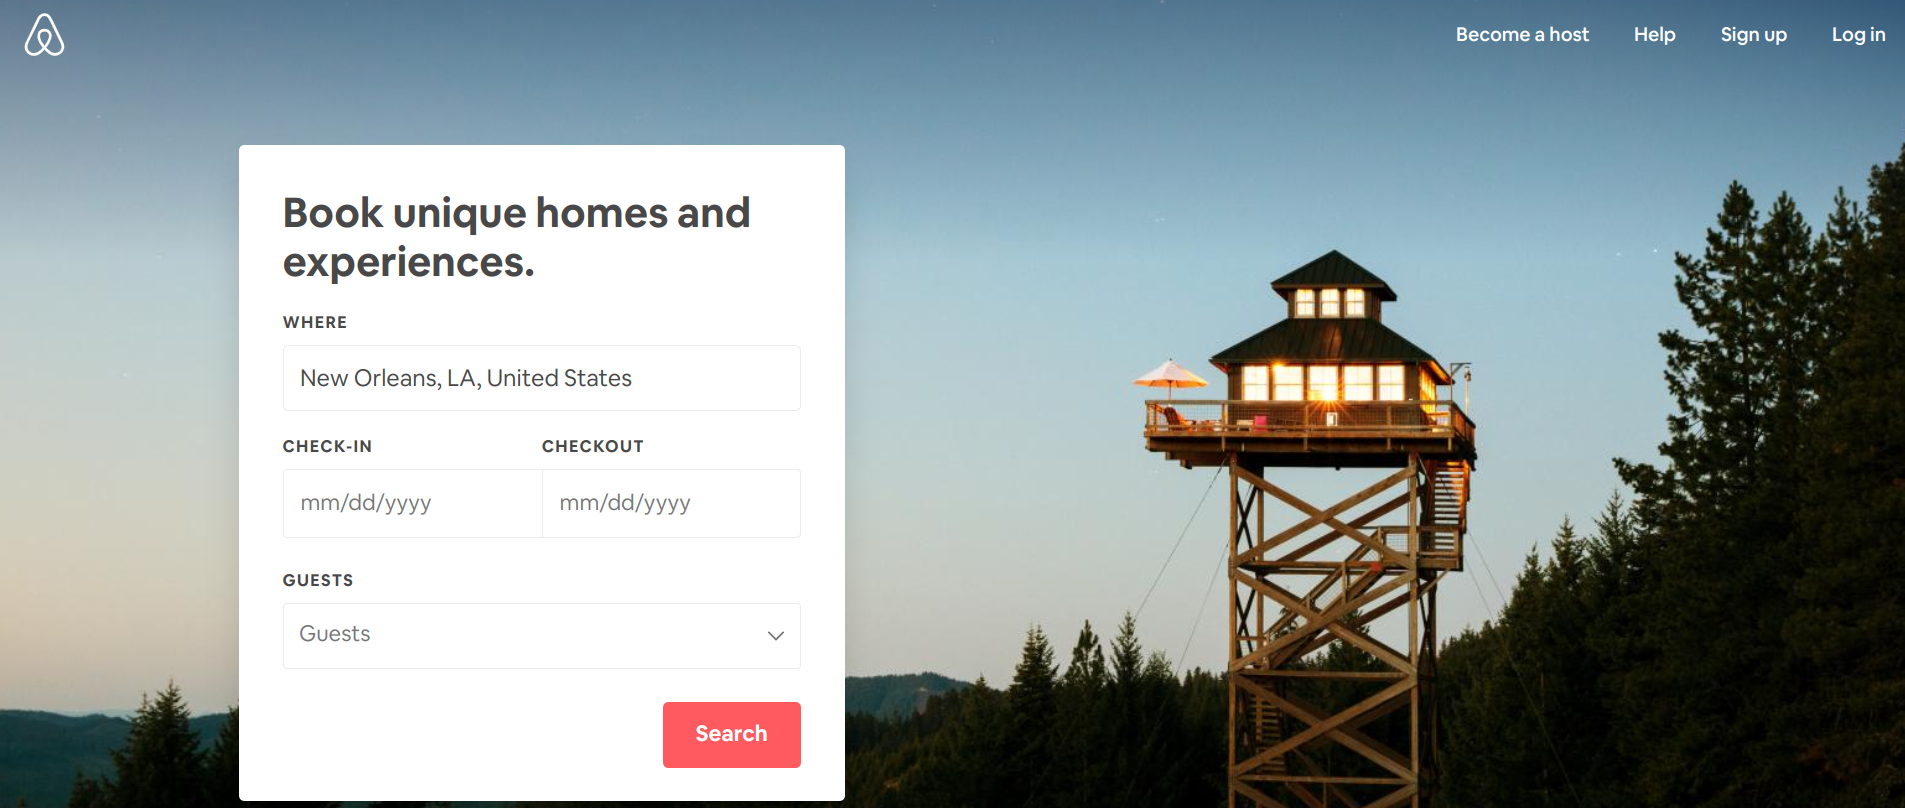 Airbnb homepage UX design